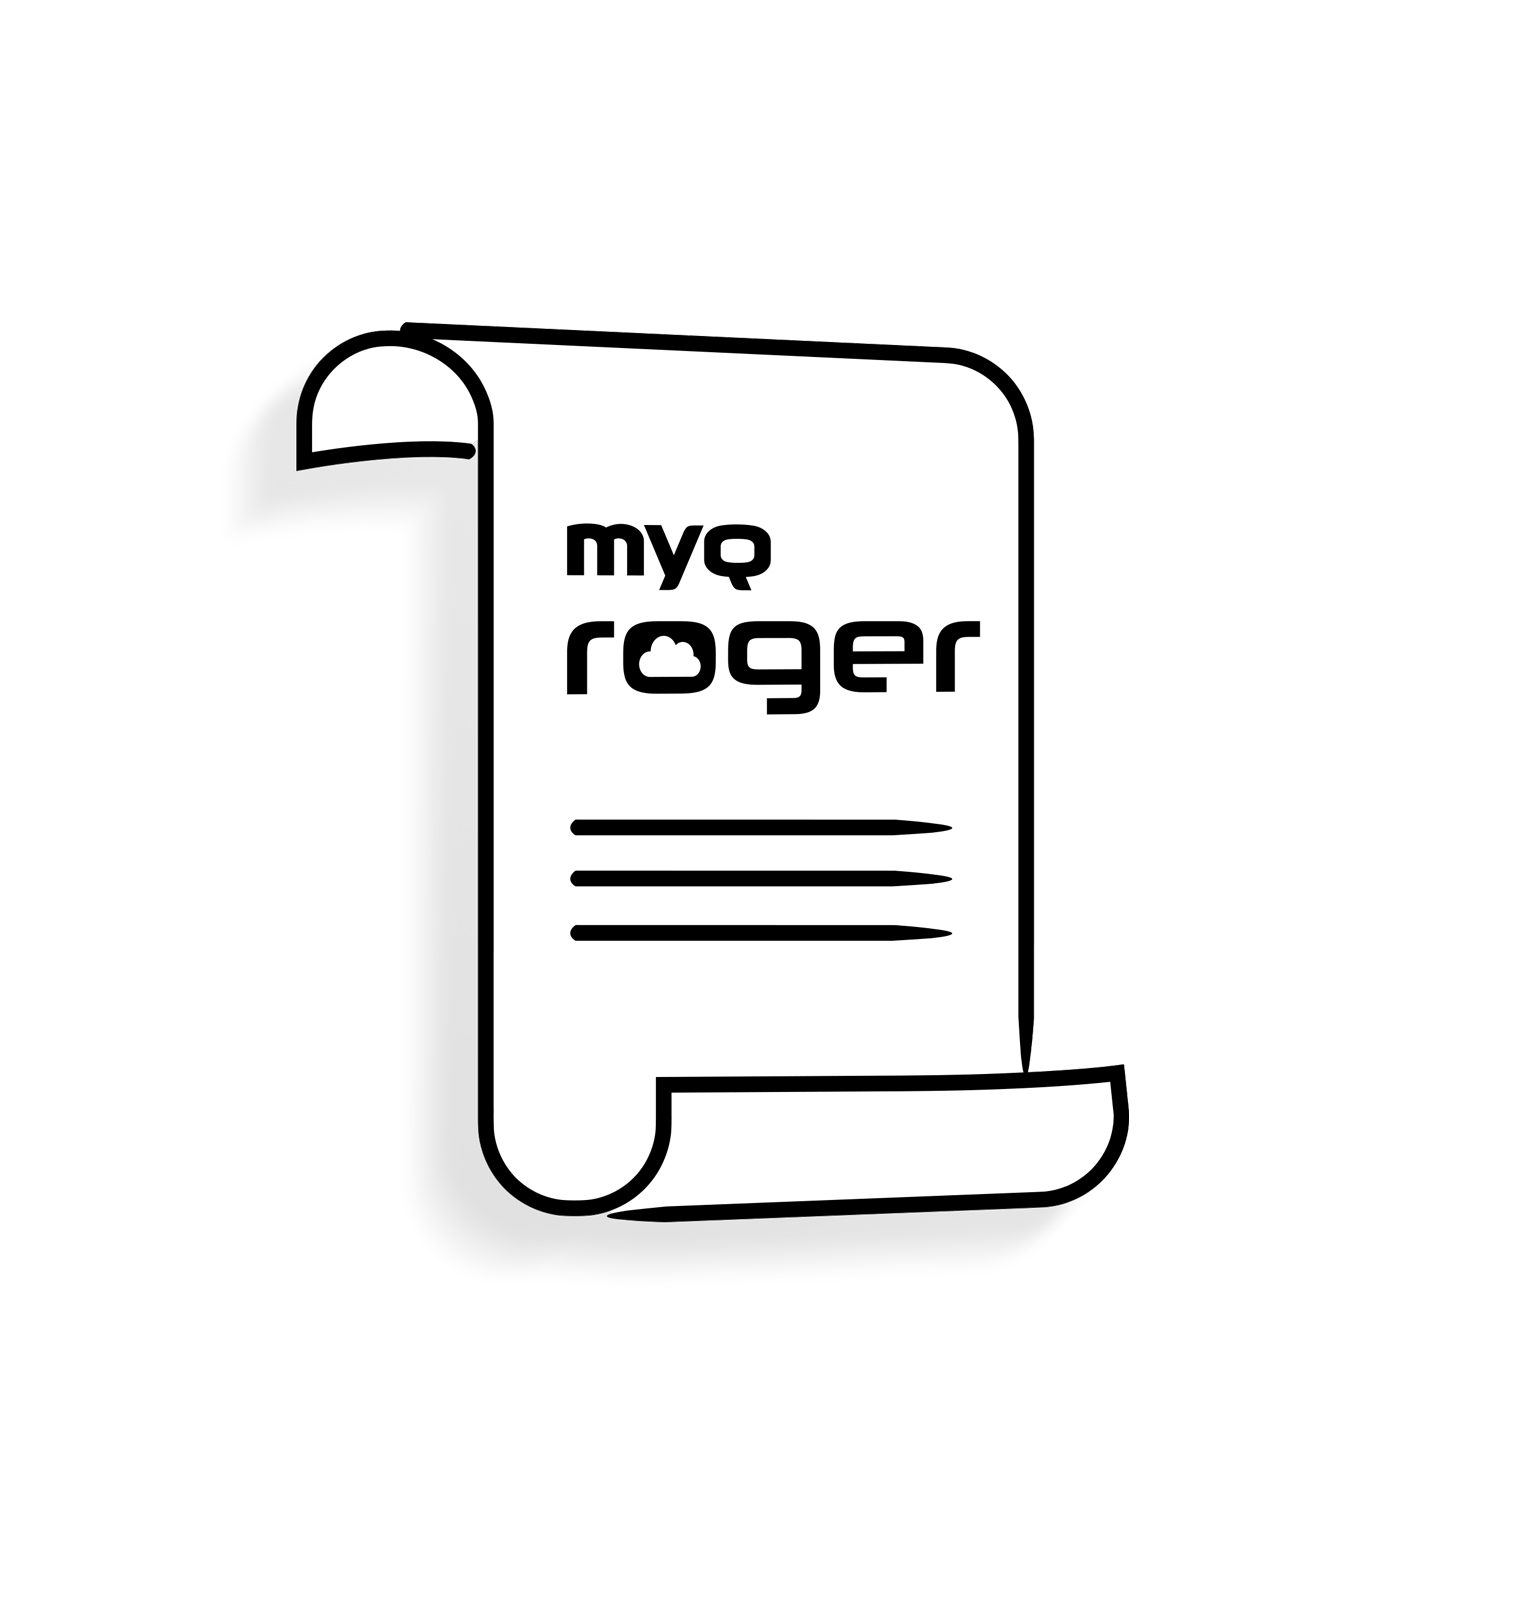 Documentos relacionados ao MyQ Roger